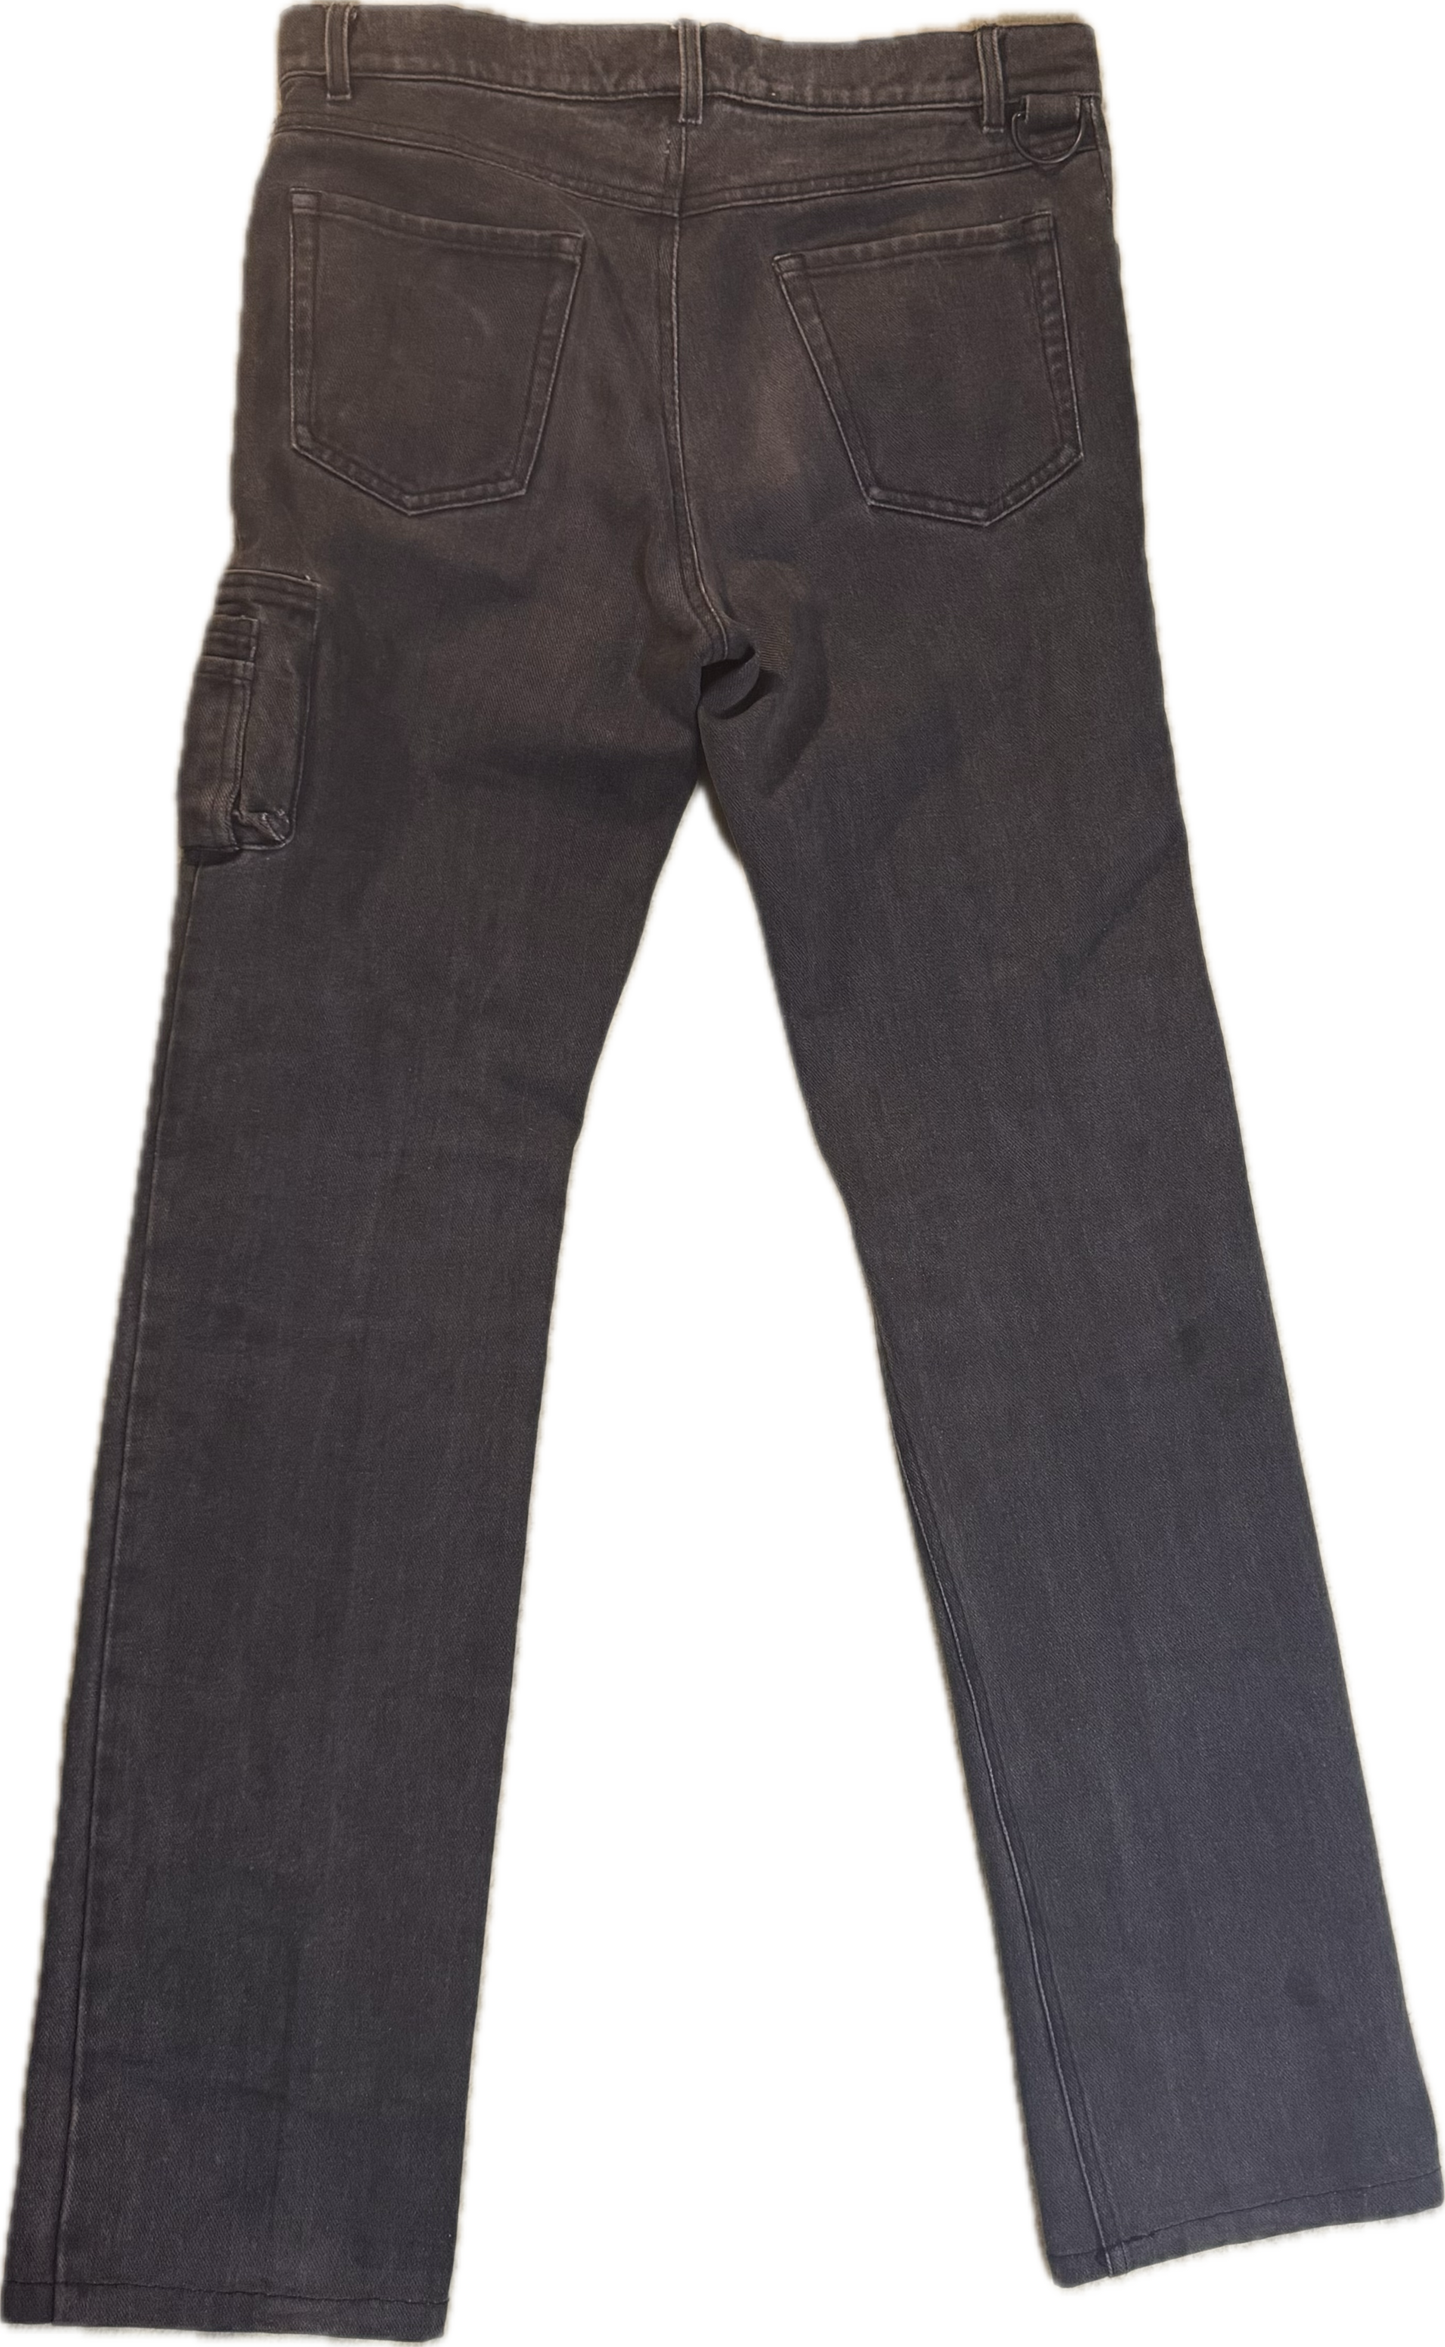 Raf Simons AW 2004 "Waves" Cargo Pocket Jeans